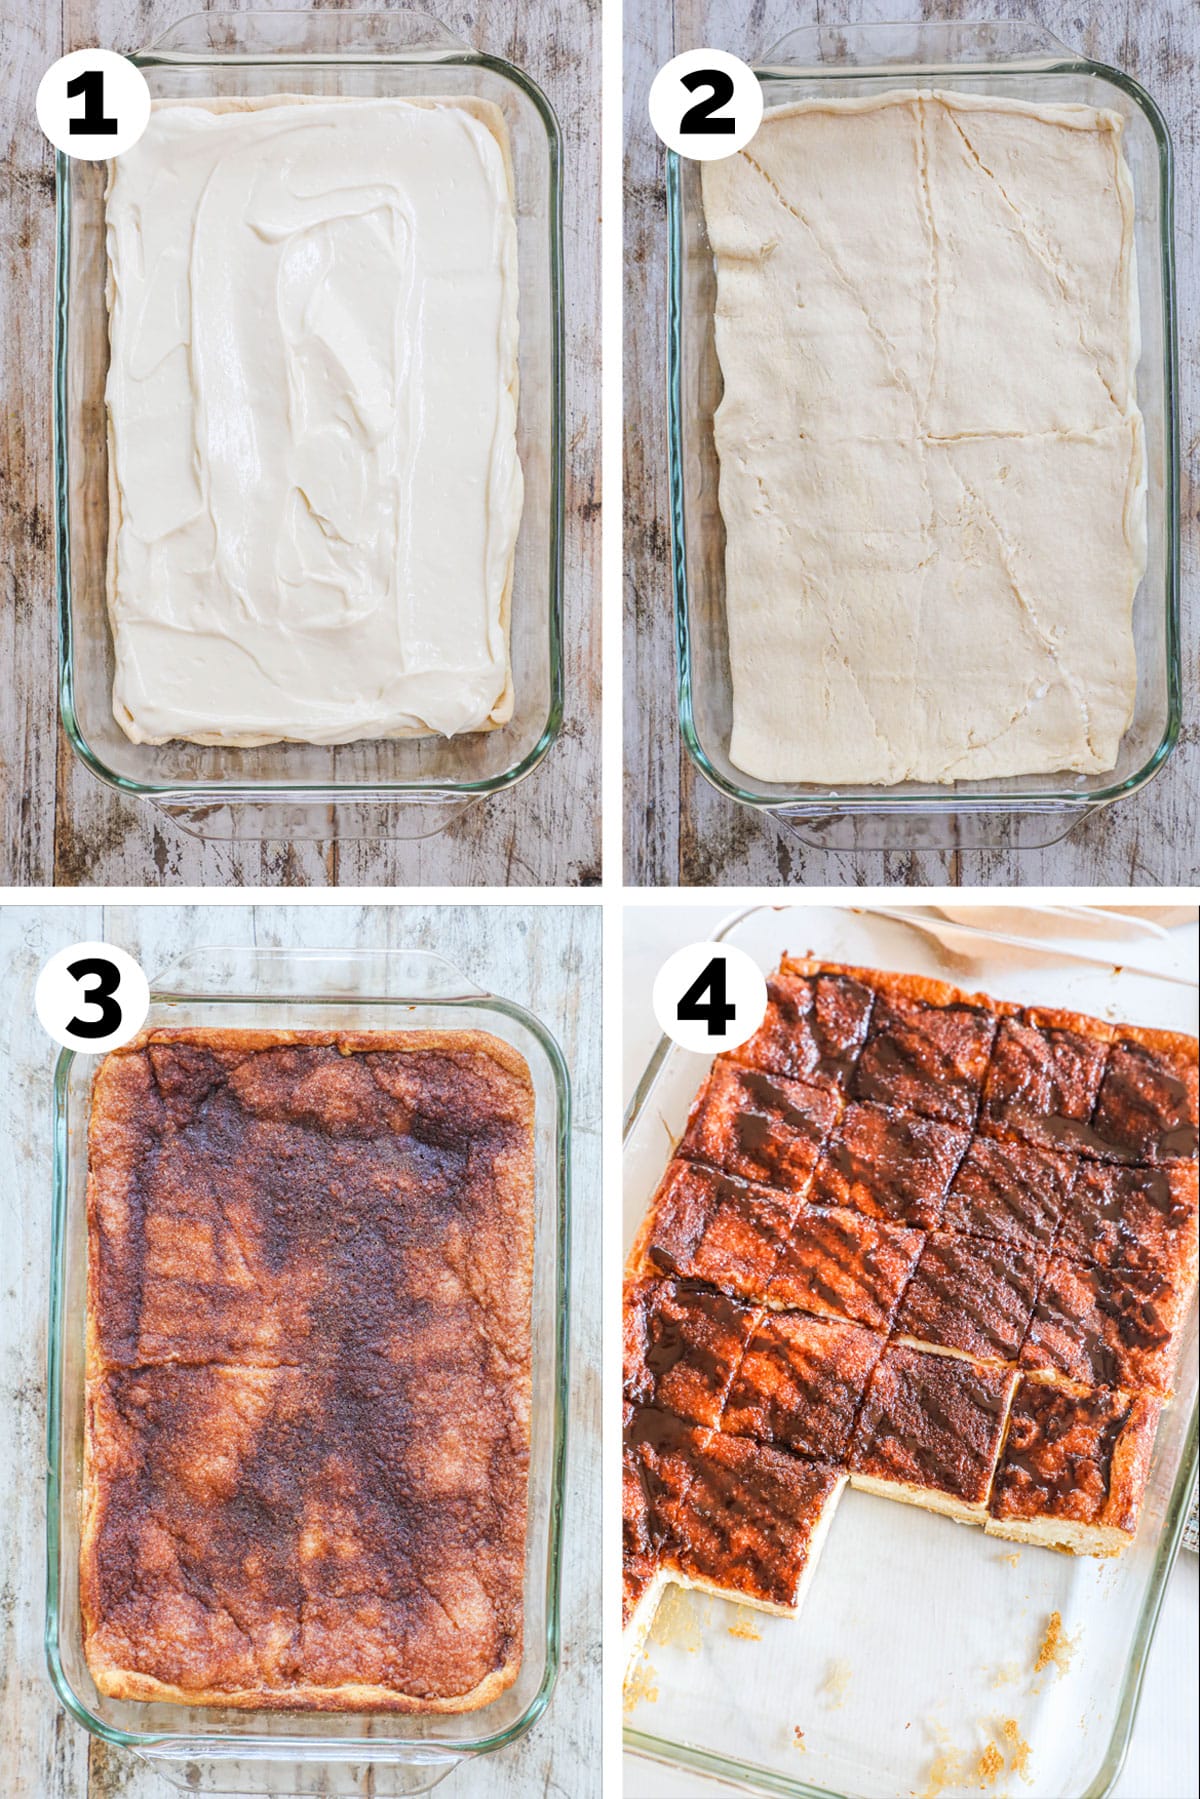 How to make churro cheesecake bars: 1) add cheesecake layer to the bottom crust, 2) add top crust, 3) dust with cinnamon sugar, 4) bake and cut